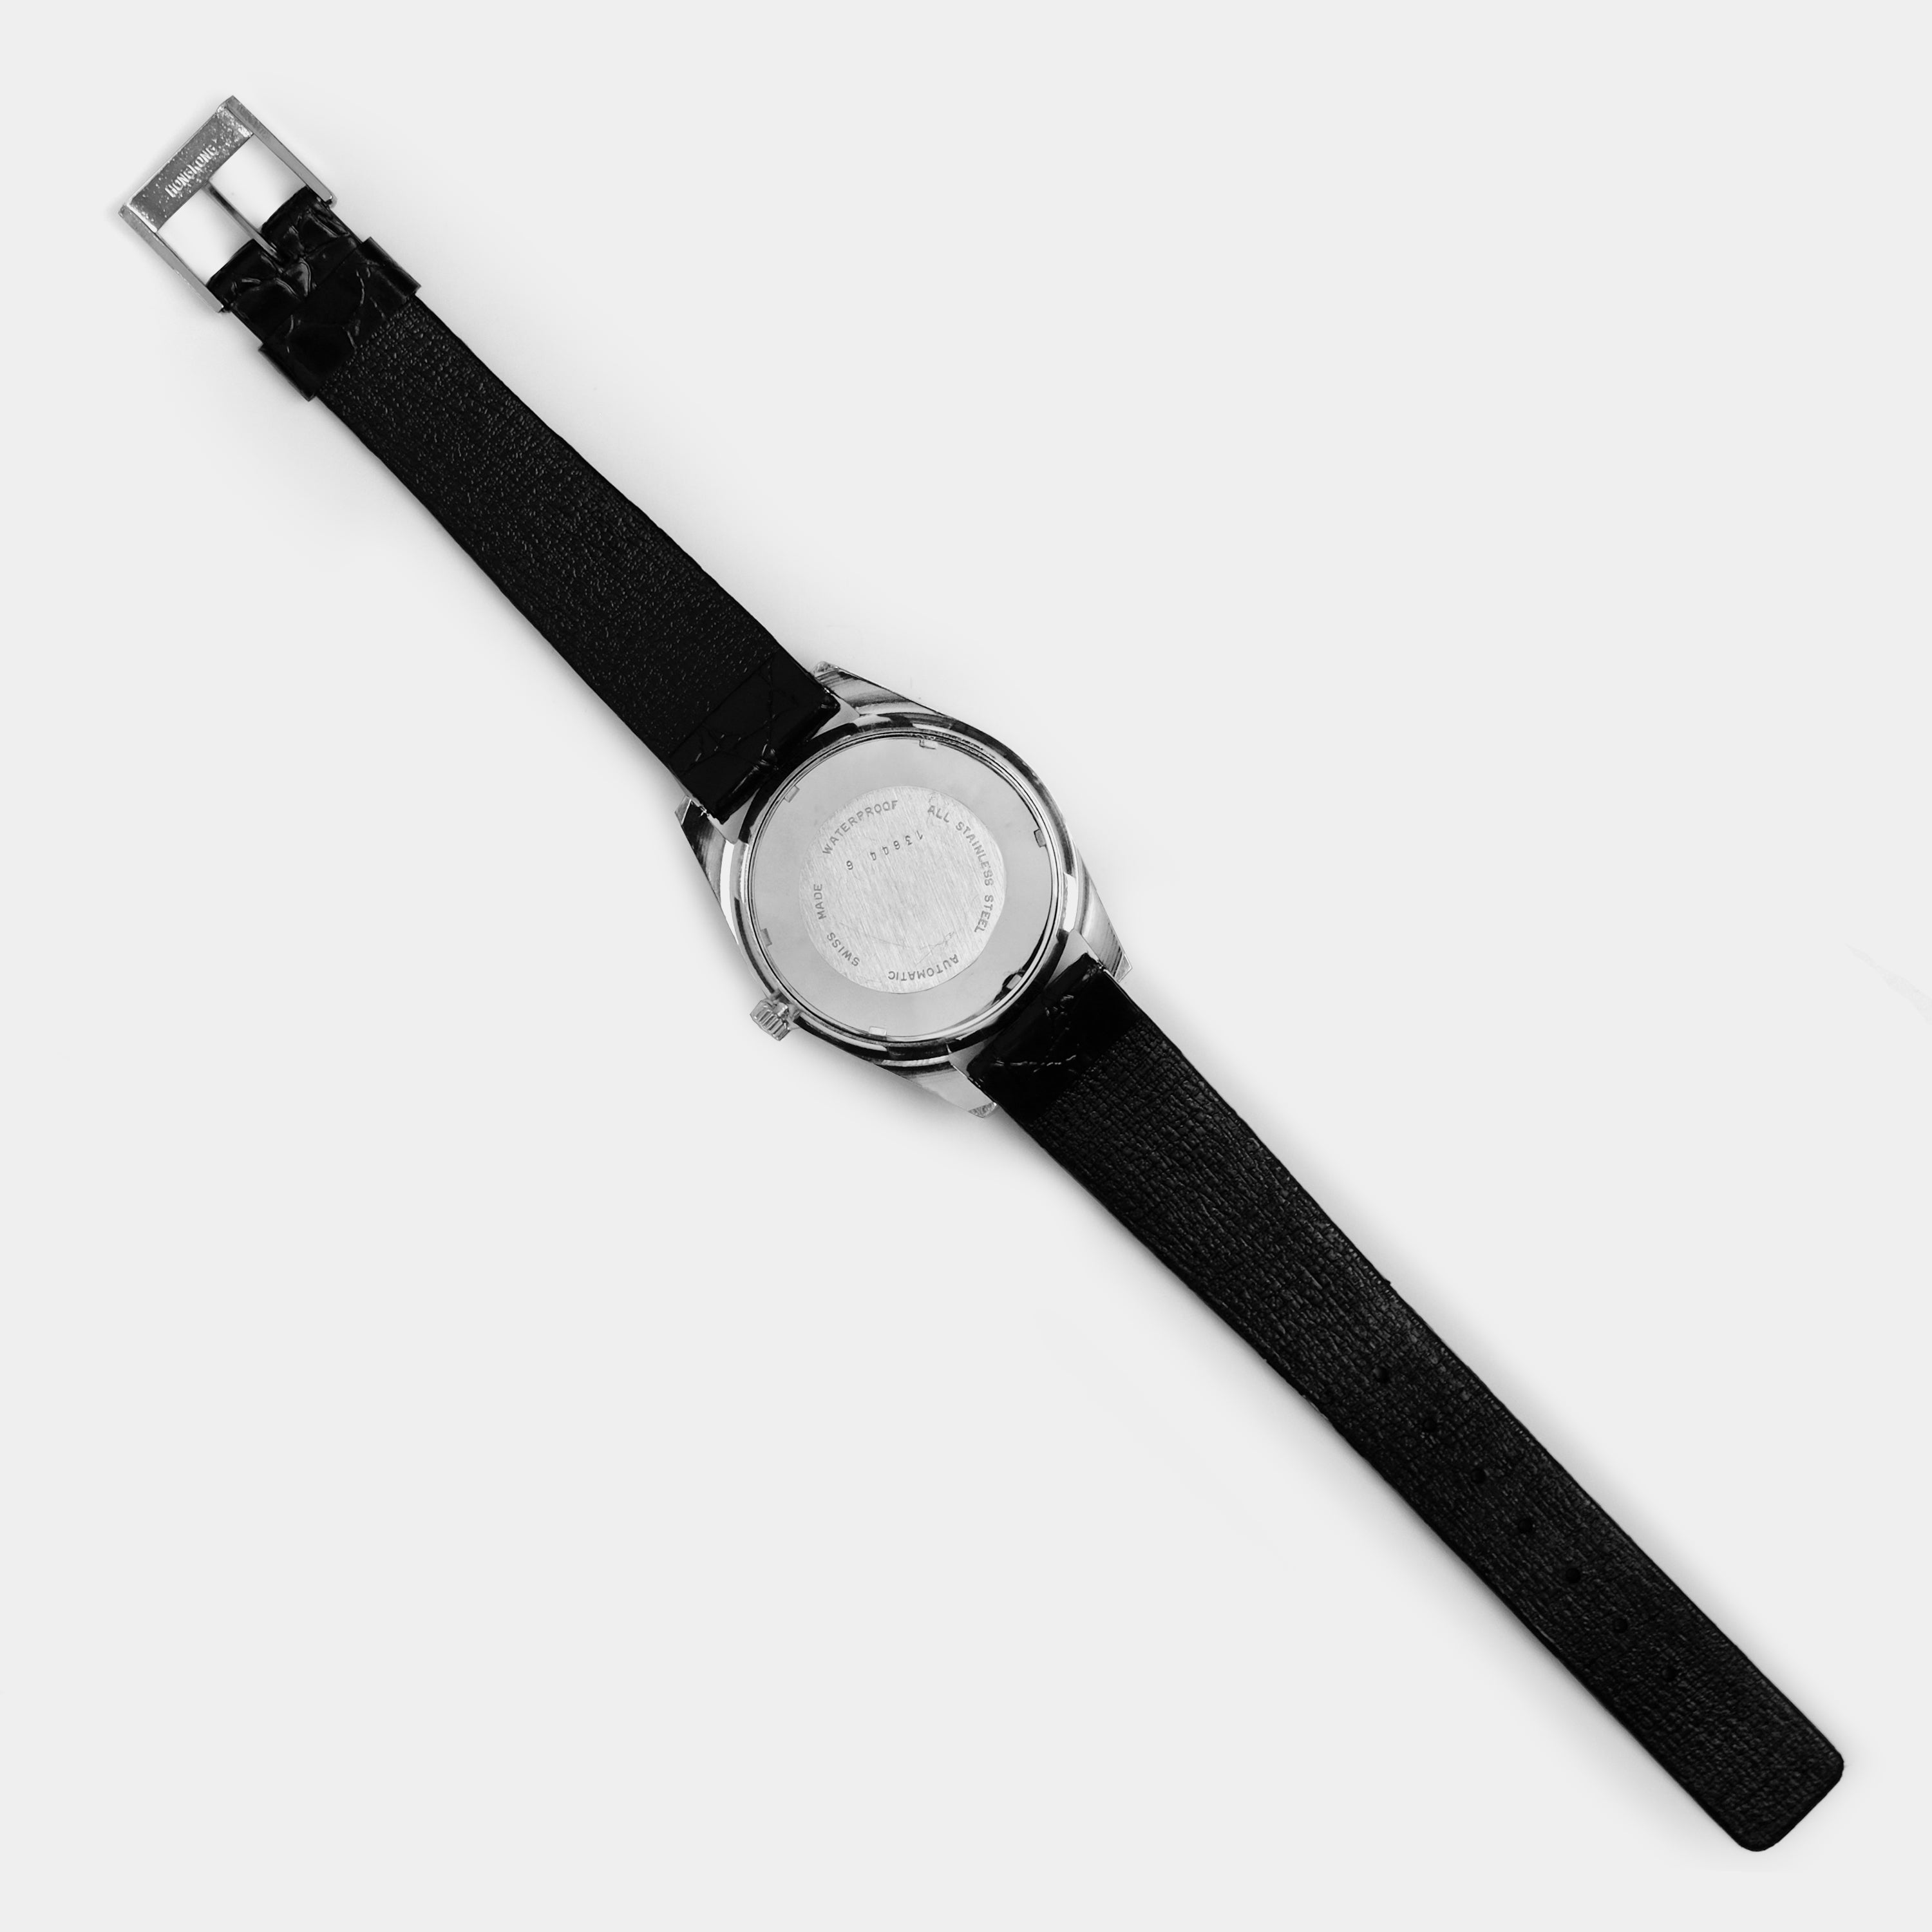 Jaquet-Girard Self-Winding Automatic Circa ~1964 Wristwatch